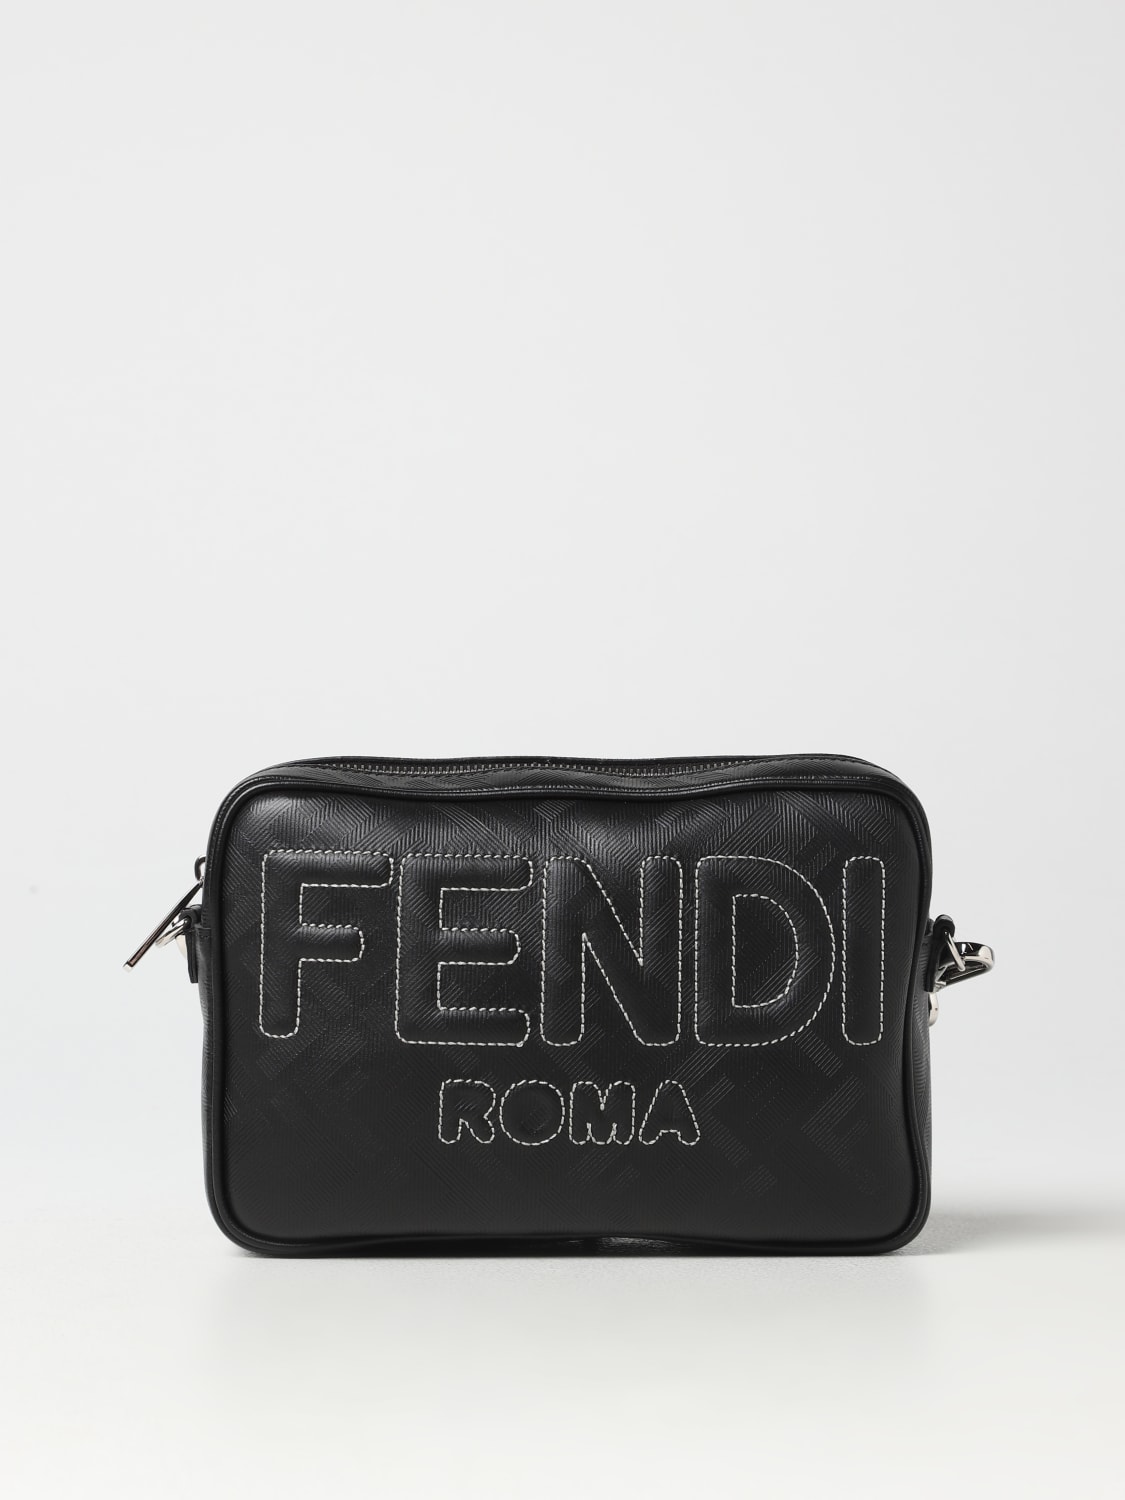 Fendi Roma Camera Case - Black leather bag